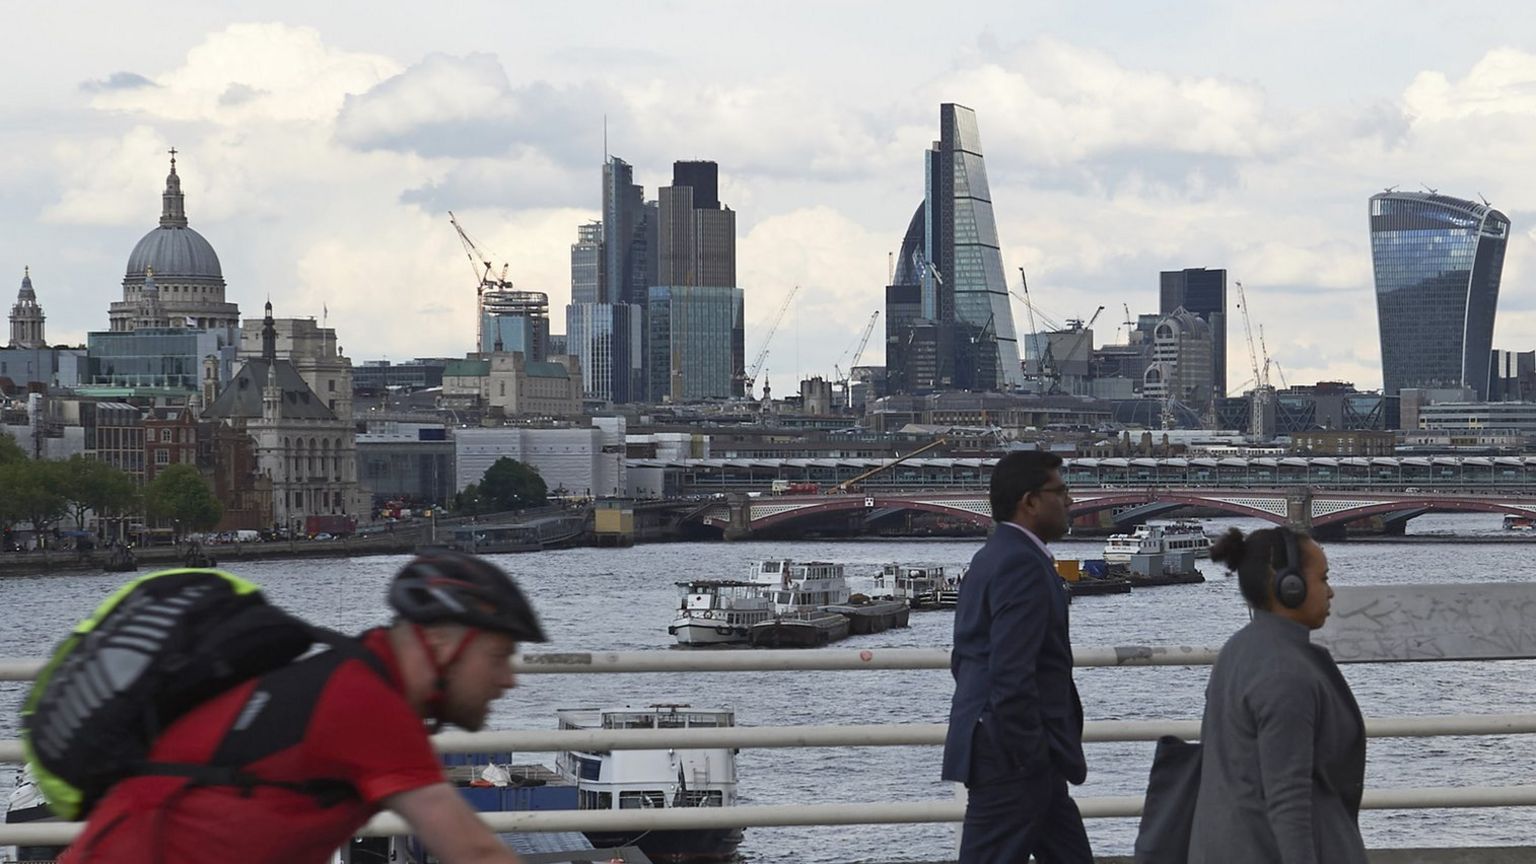 The skyline of buildings in The City of London is seen from Waterloo Bridge